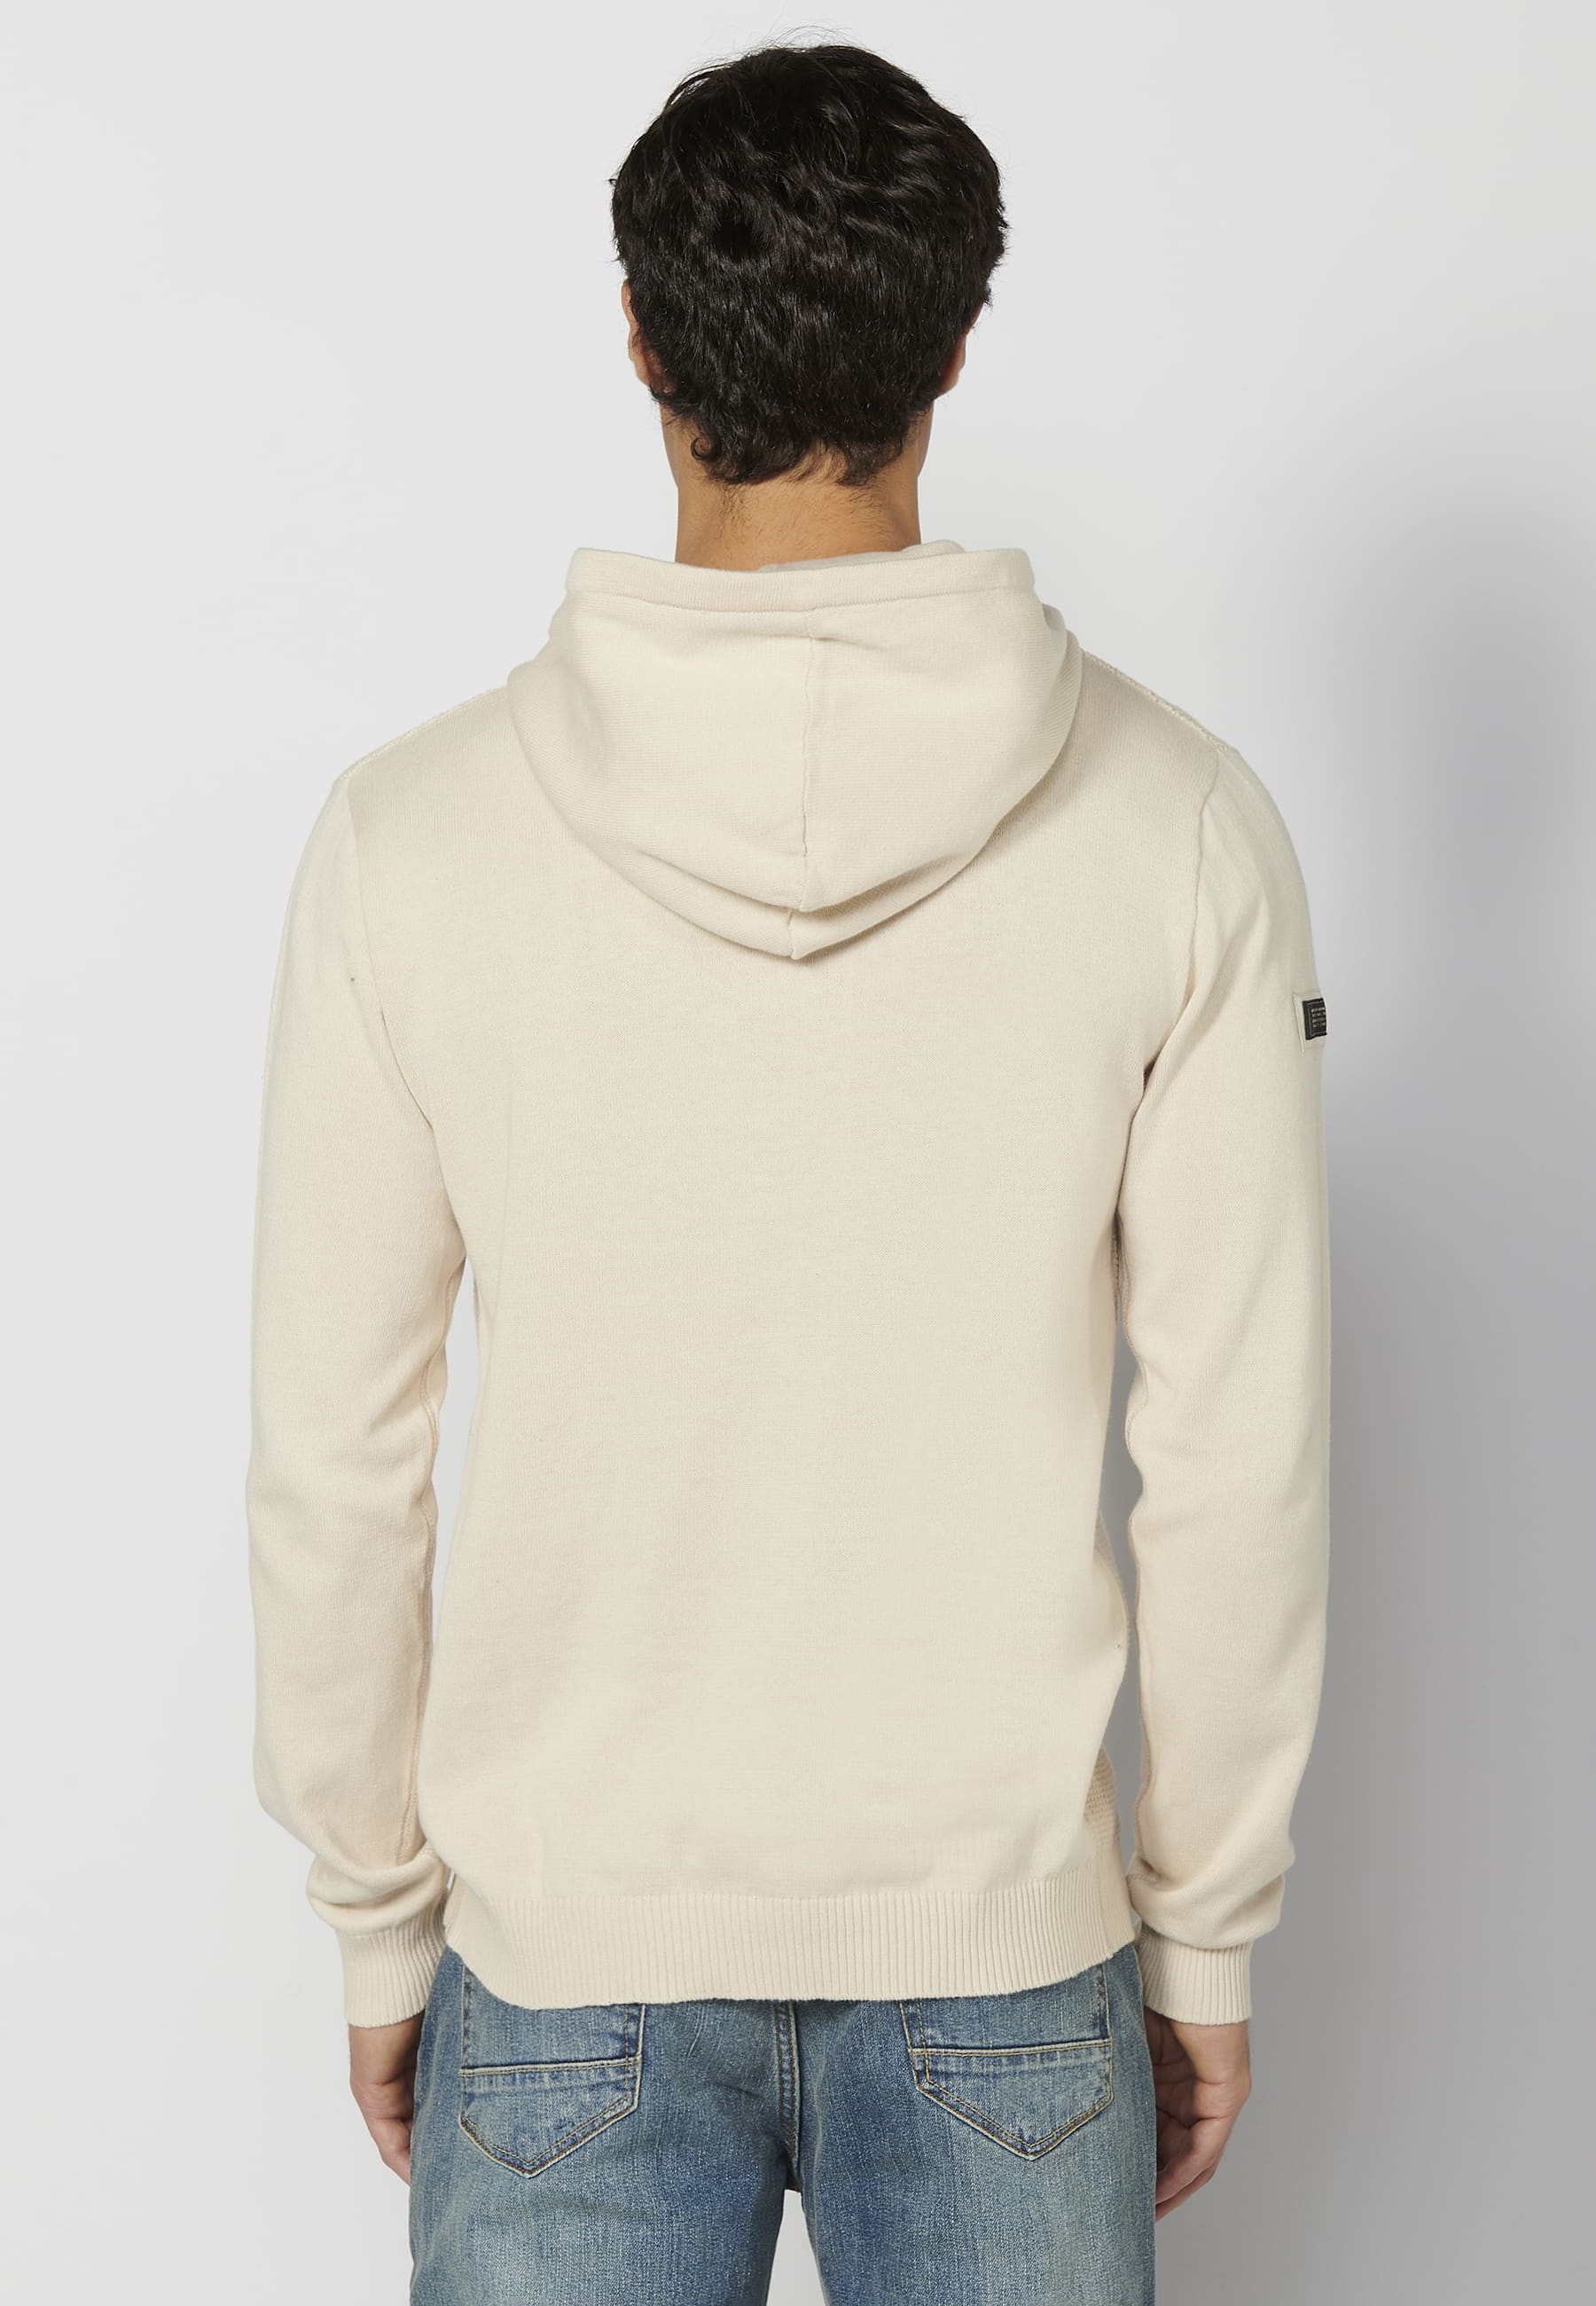 Long-sleeved tricot sweatshirt with adjustable ecru hood for Men 3